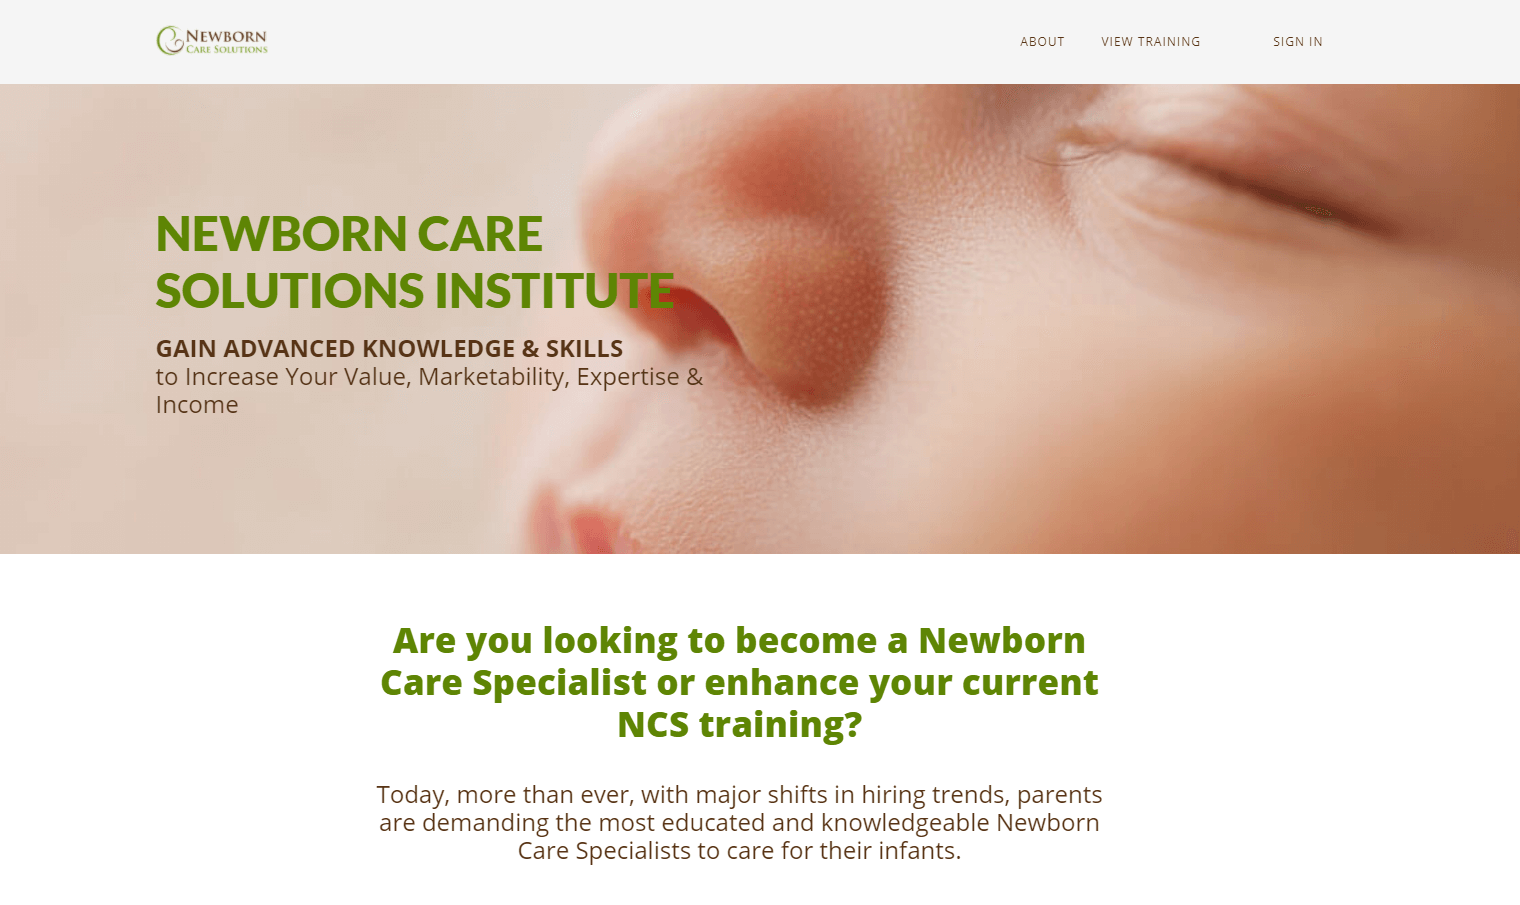 Thinkific: Newborn Care Solutions Institute